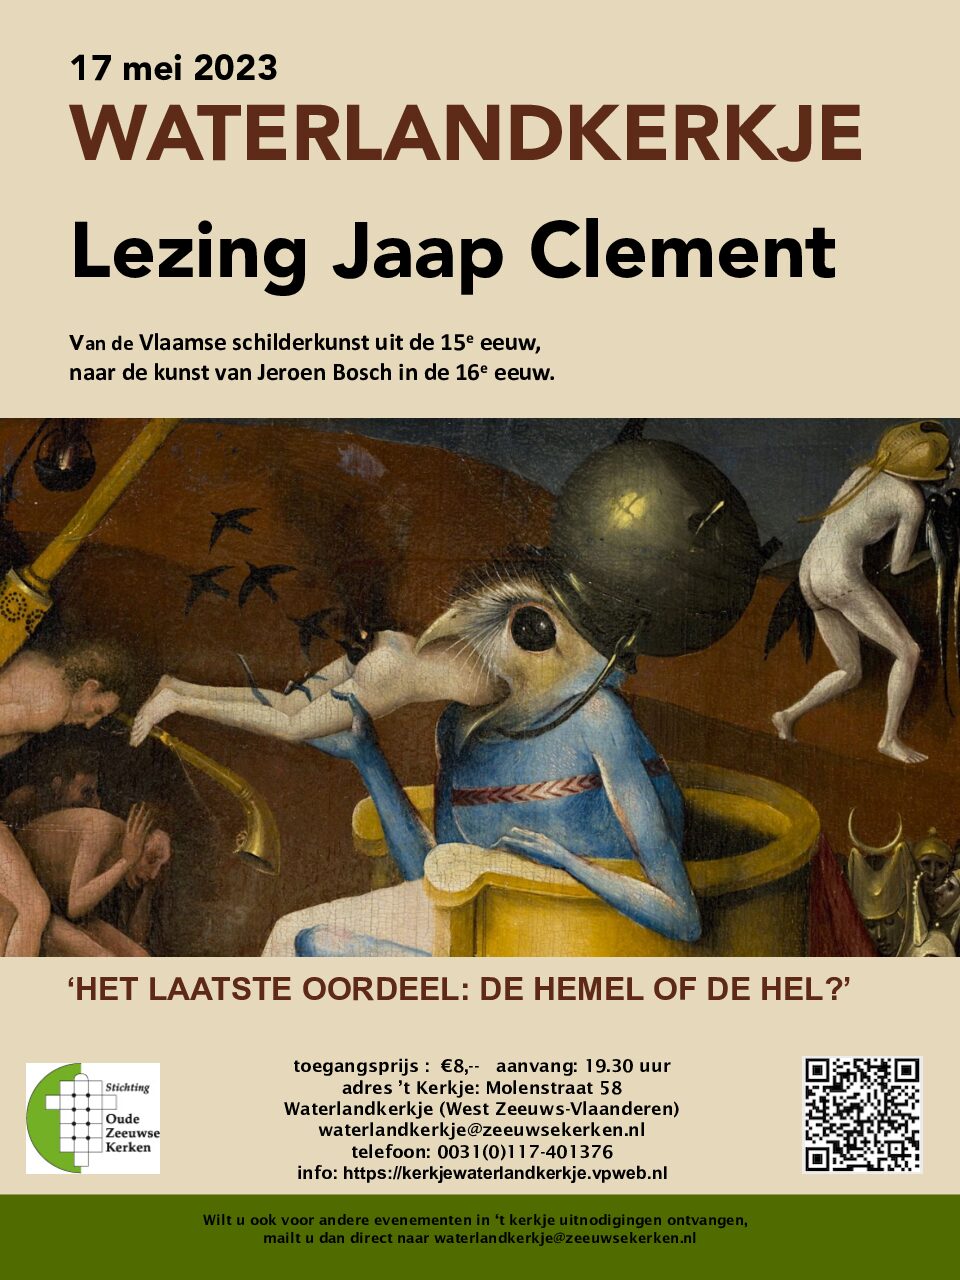 17 mei Lezing van Jaap Clement in ’t kerkje van Waterlandkerkje